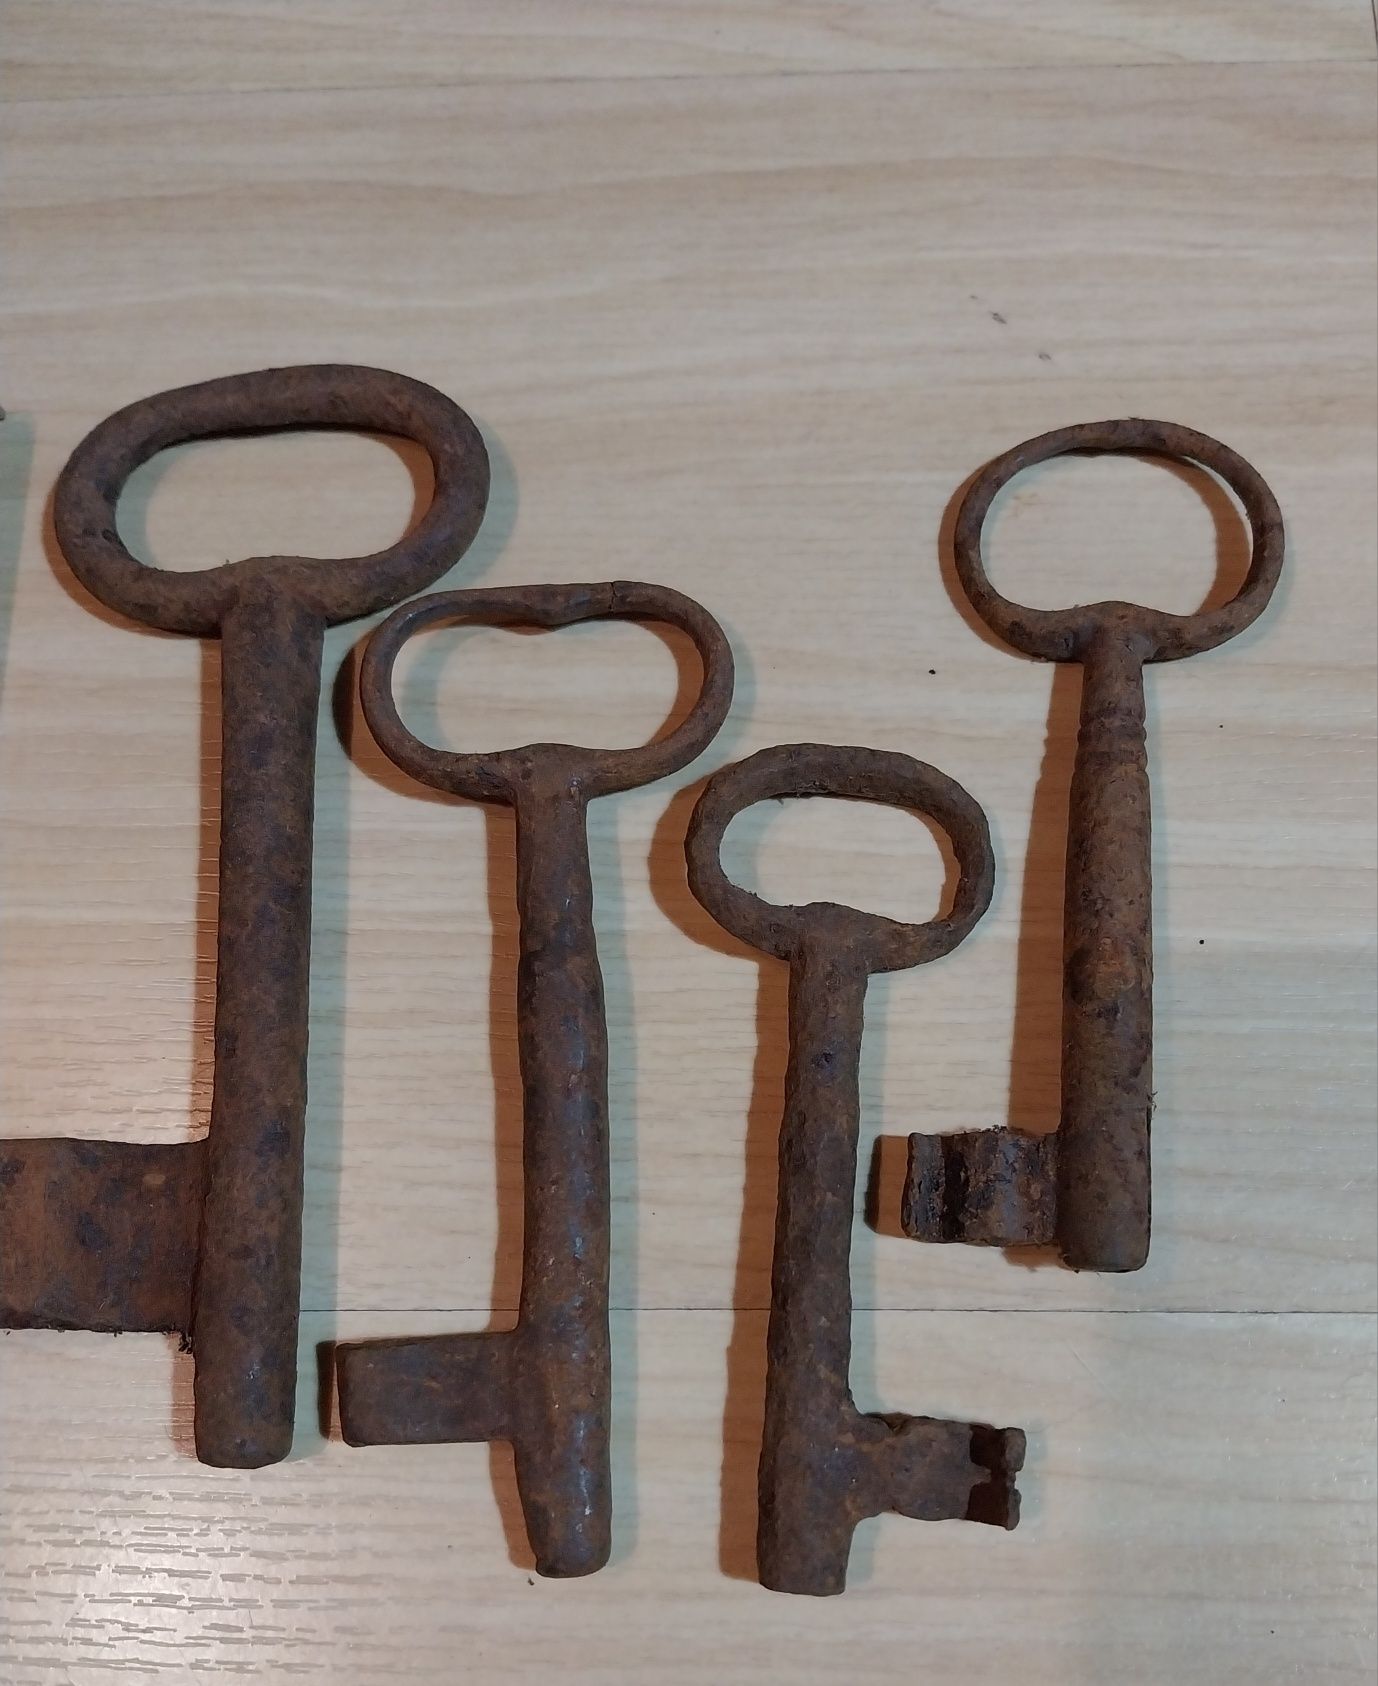 Lote de 4 chaves antigas em ferro